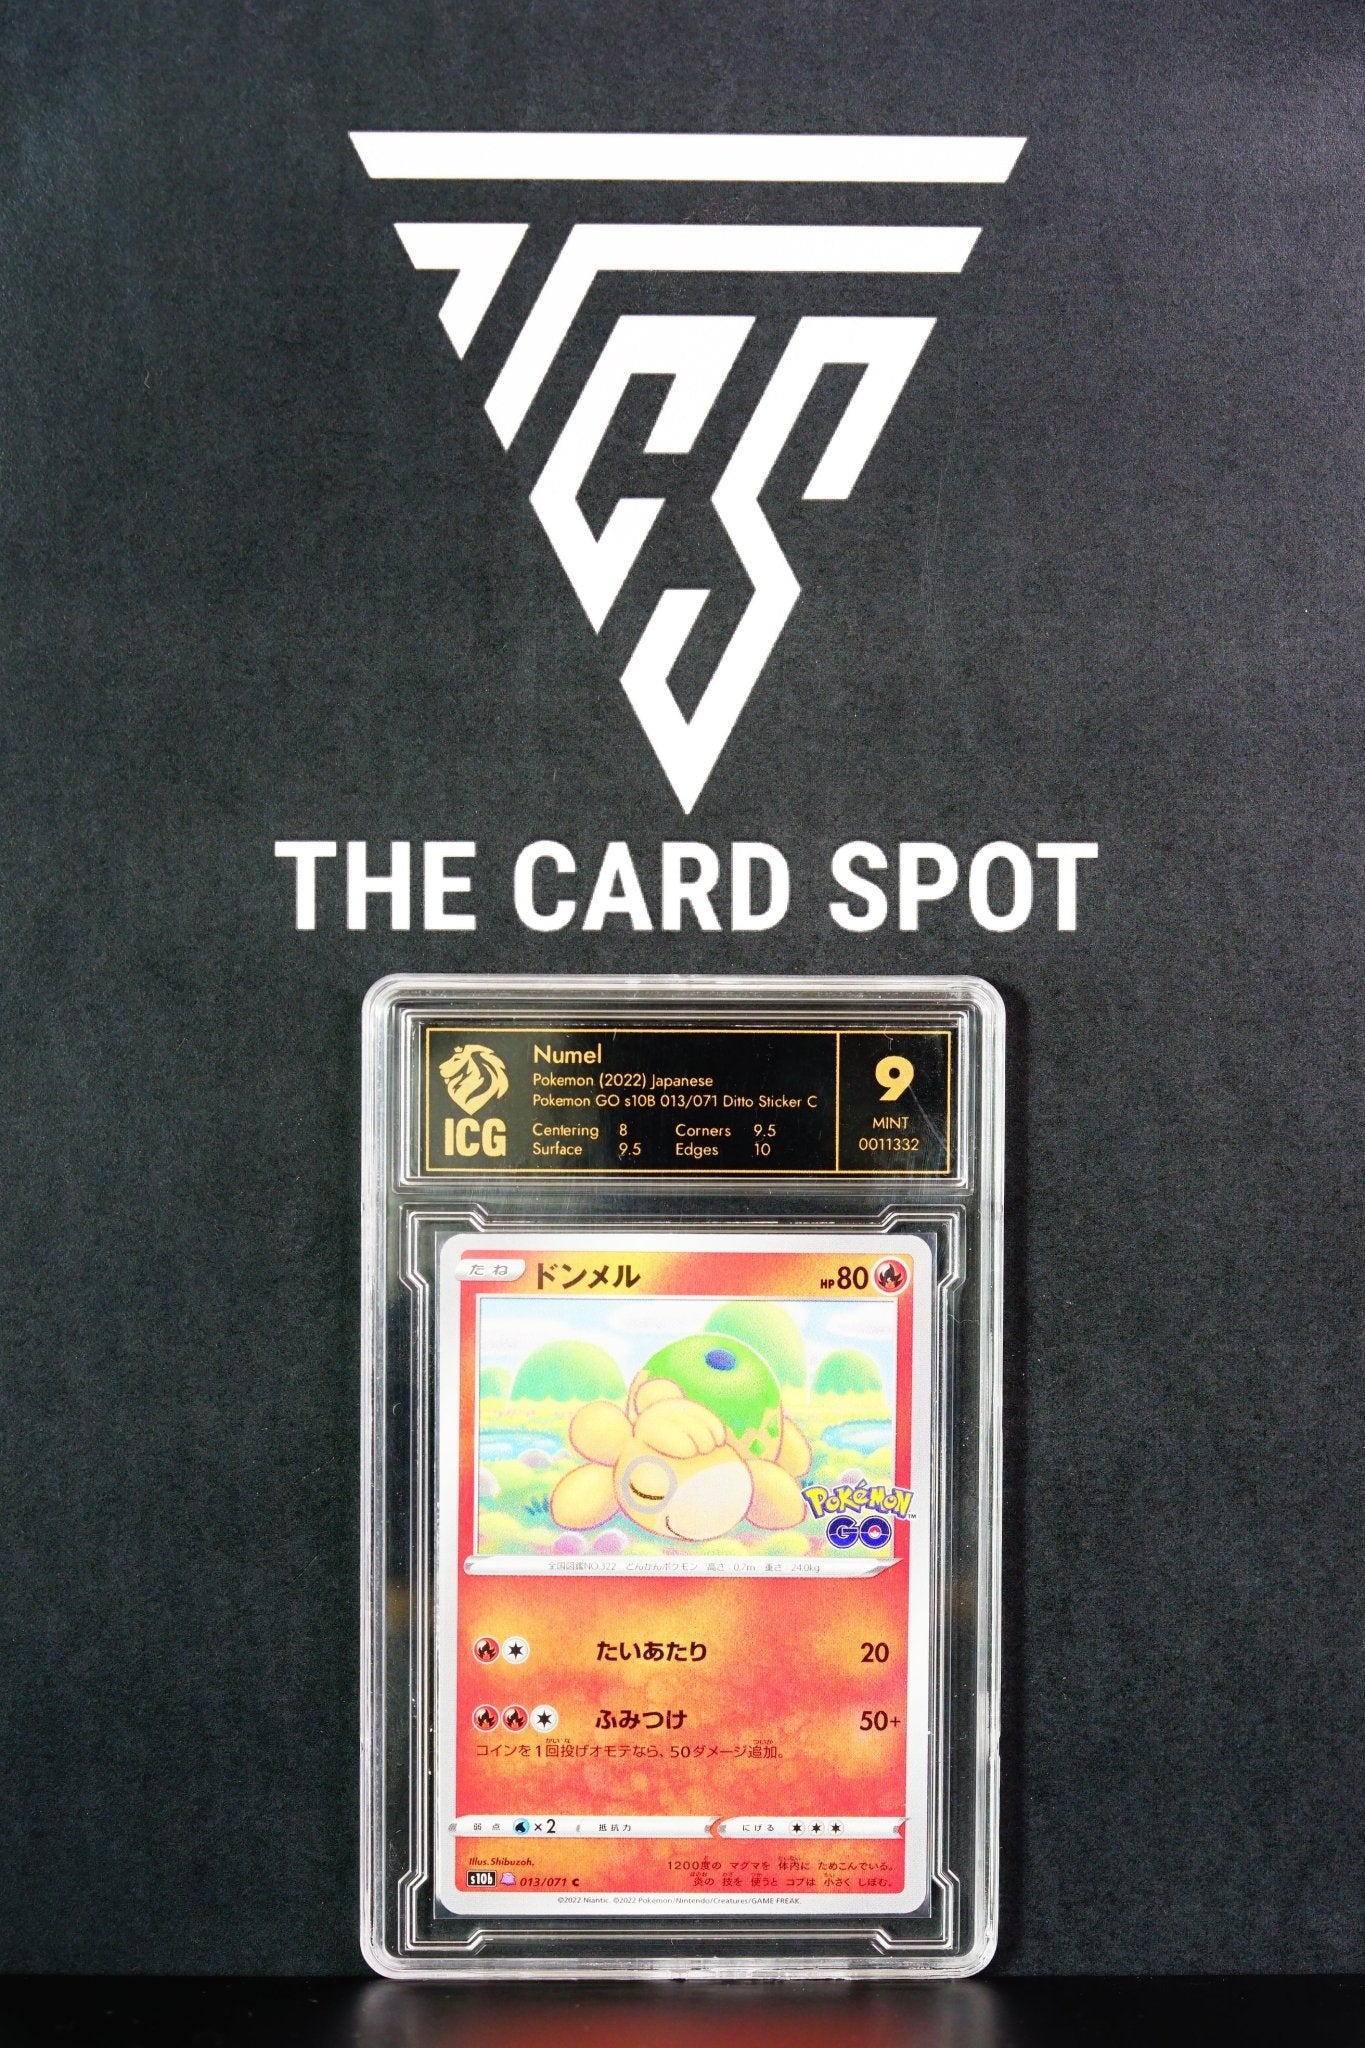 Numel (Ditto sticker) 013/071 - ICG 9 (PSA) - Pokemon Go - Pokemon Card - THE CARD SPOT PTY LTD.Pokemon GradedPokémon